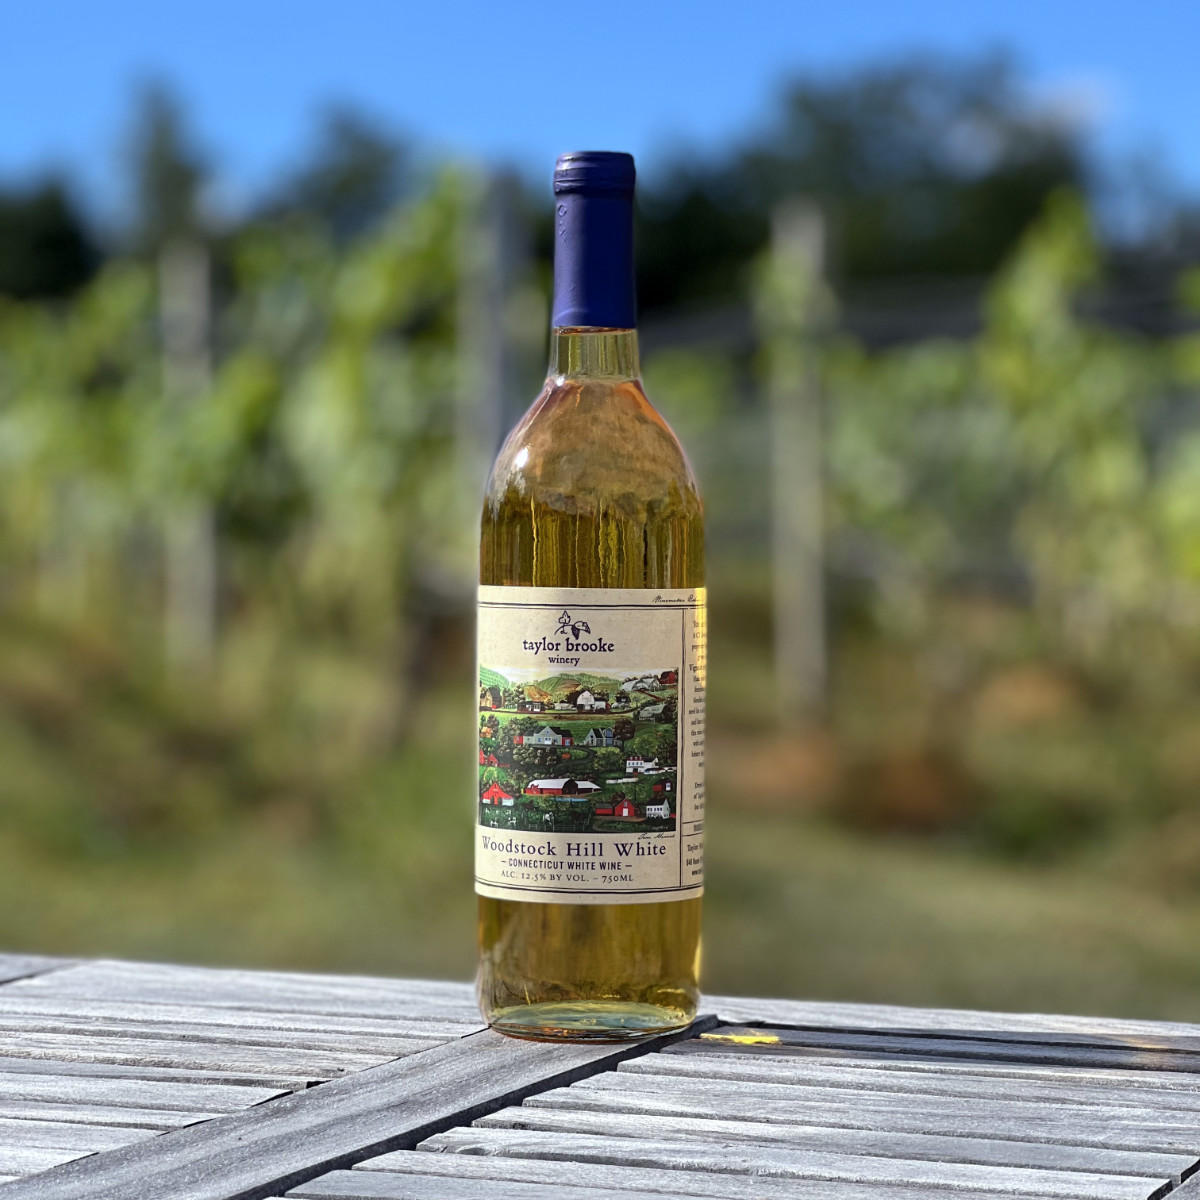 Woodstock Hill White wine bottle